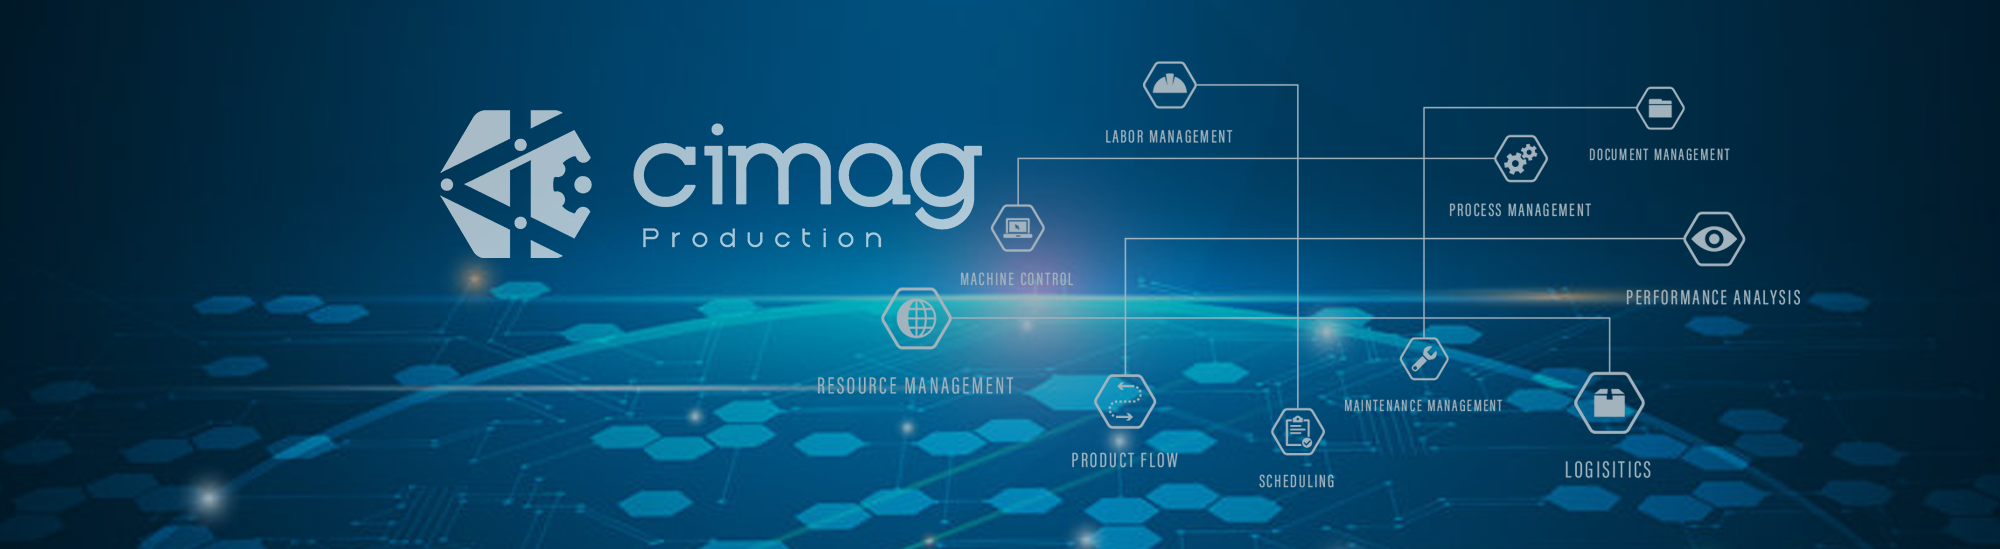 CIMAG Production logo on a blue background